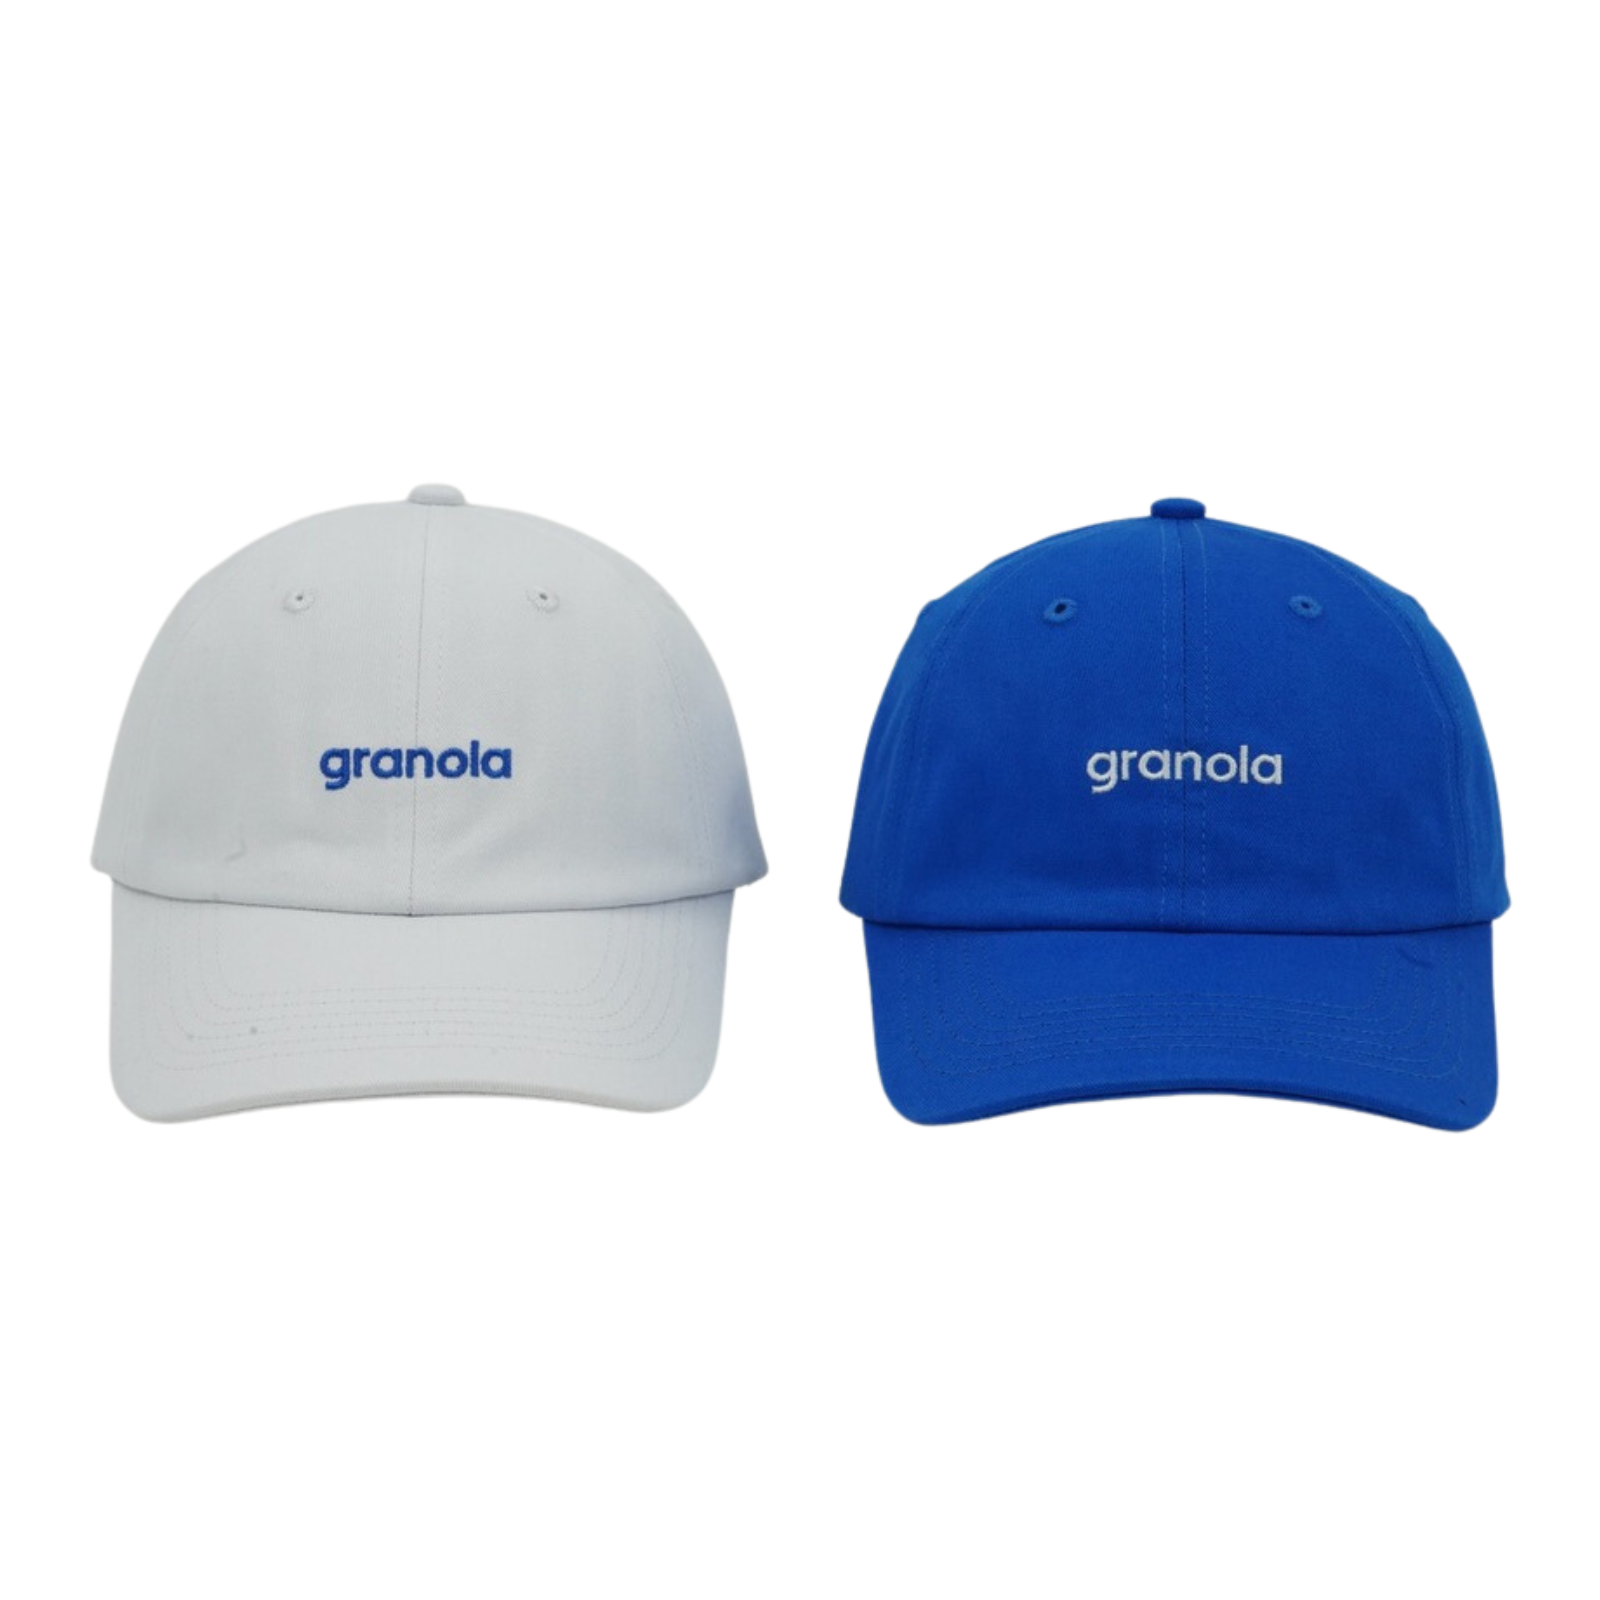 granola hat